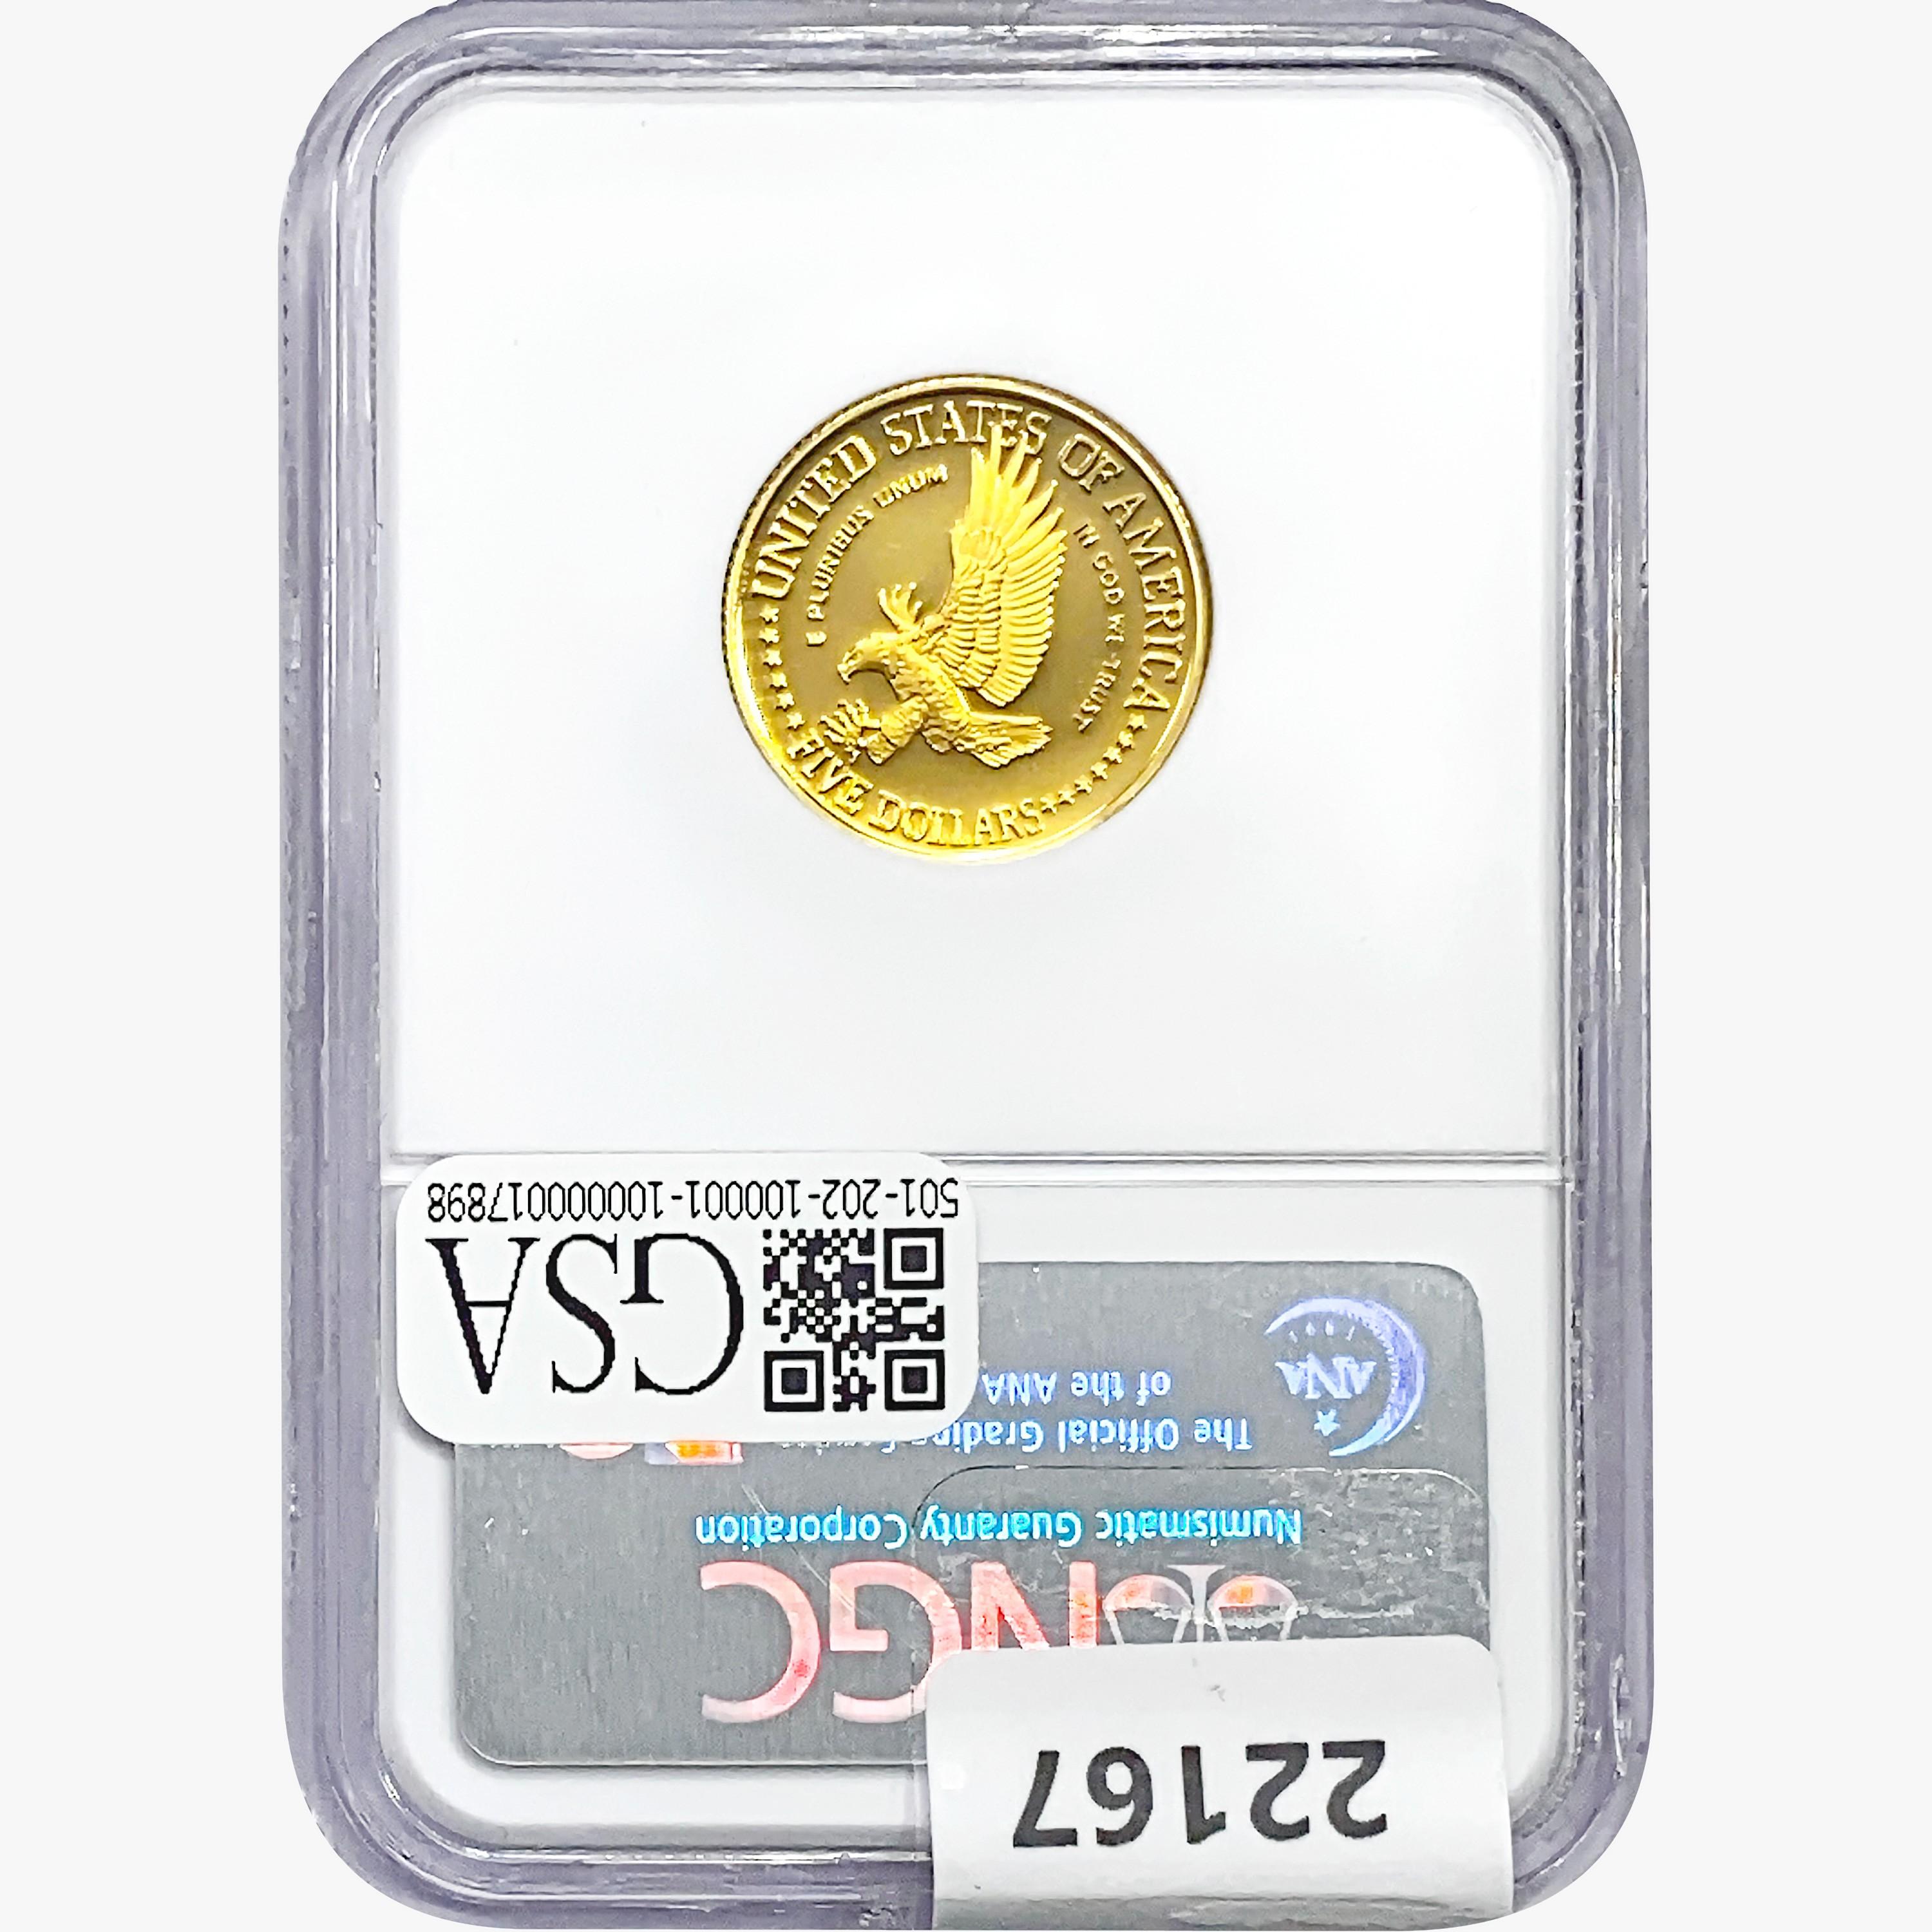 1986-W .2419oz. Gold $5 Liberty NGC PF70 UC